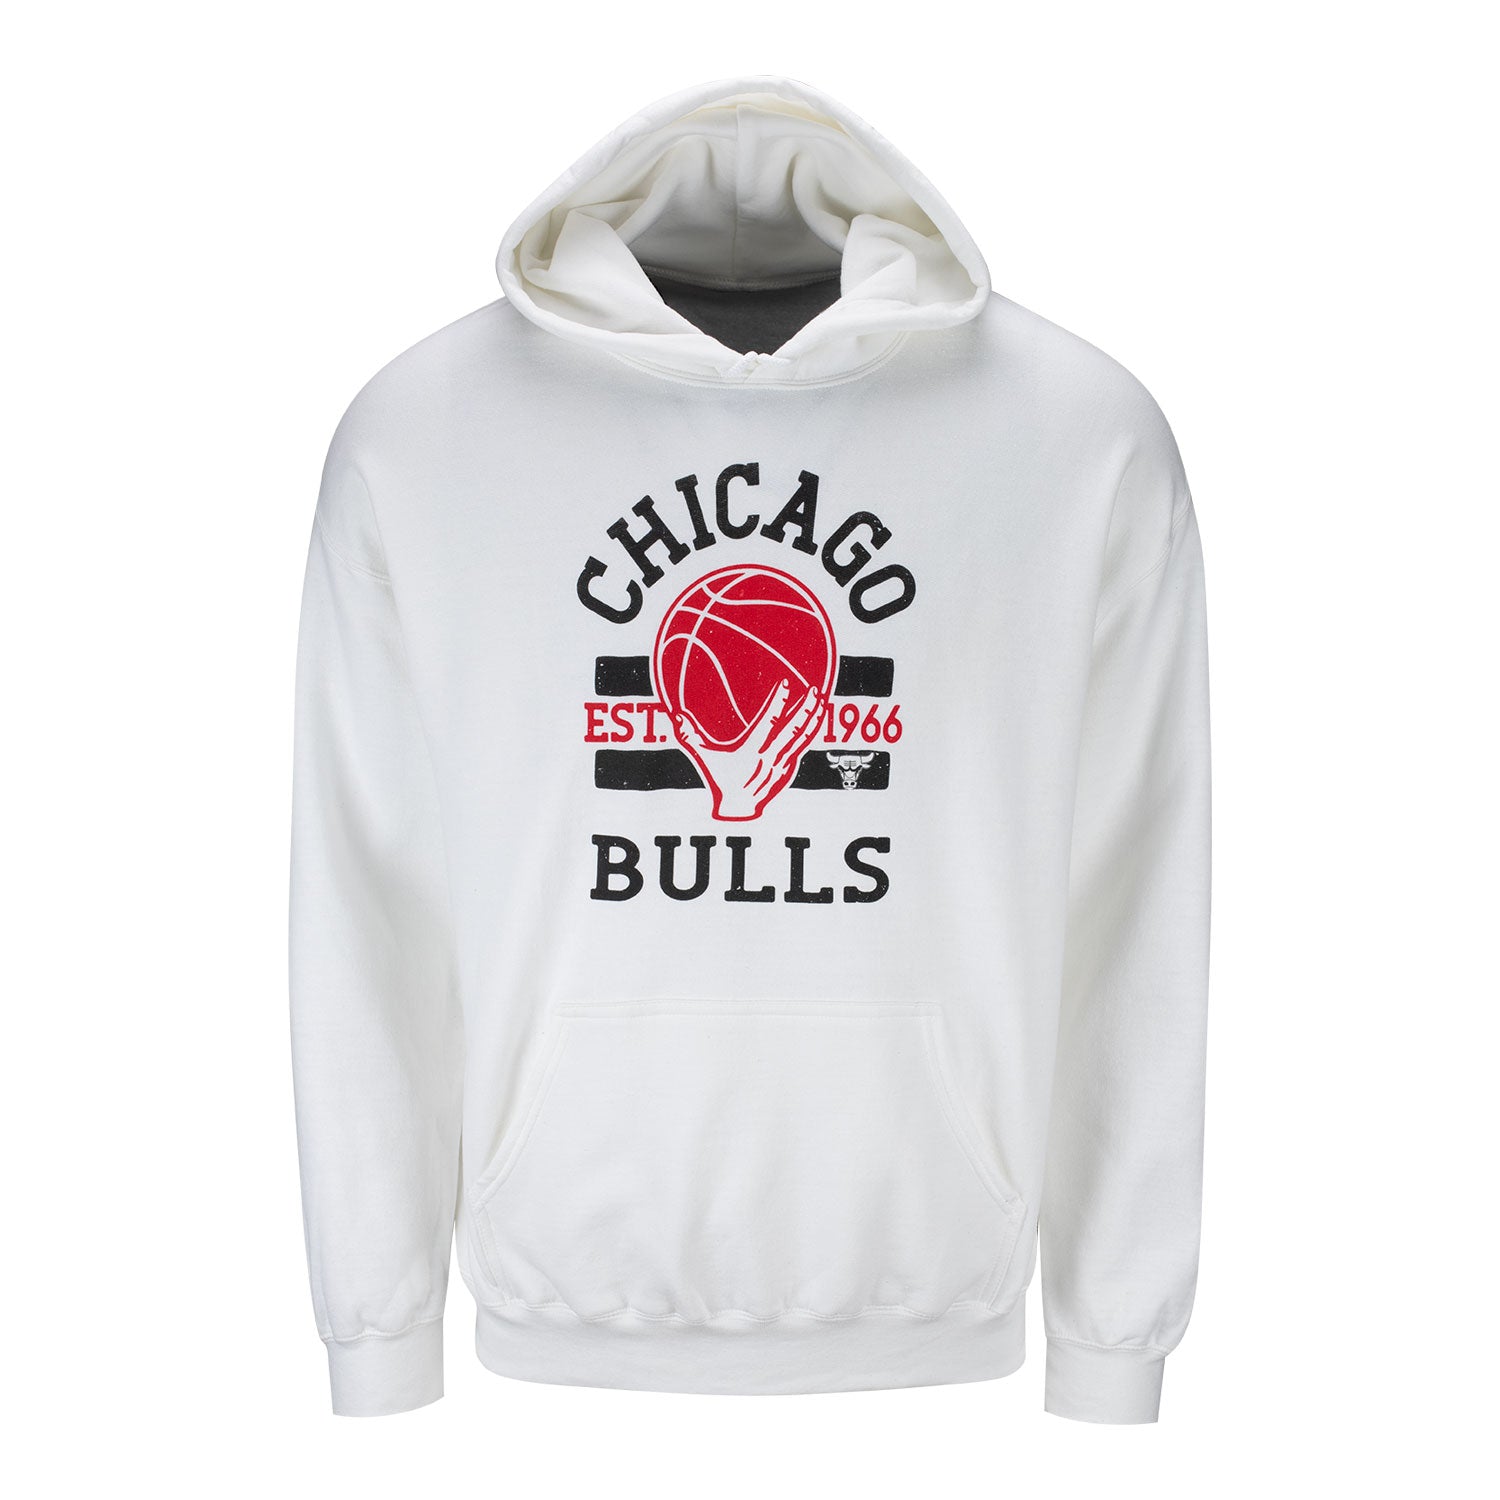 Chicago Bulls 1966 IOG Sweatshirt in white - front view